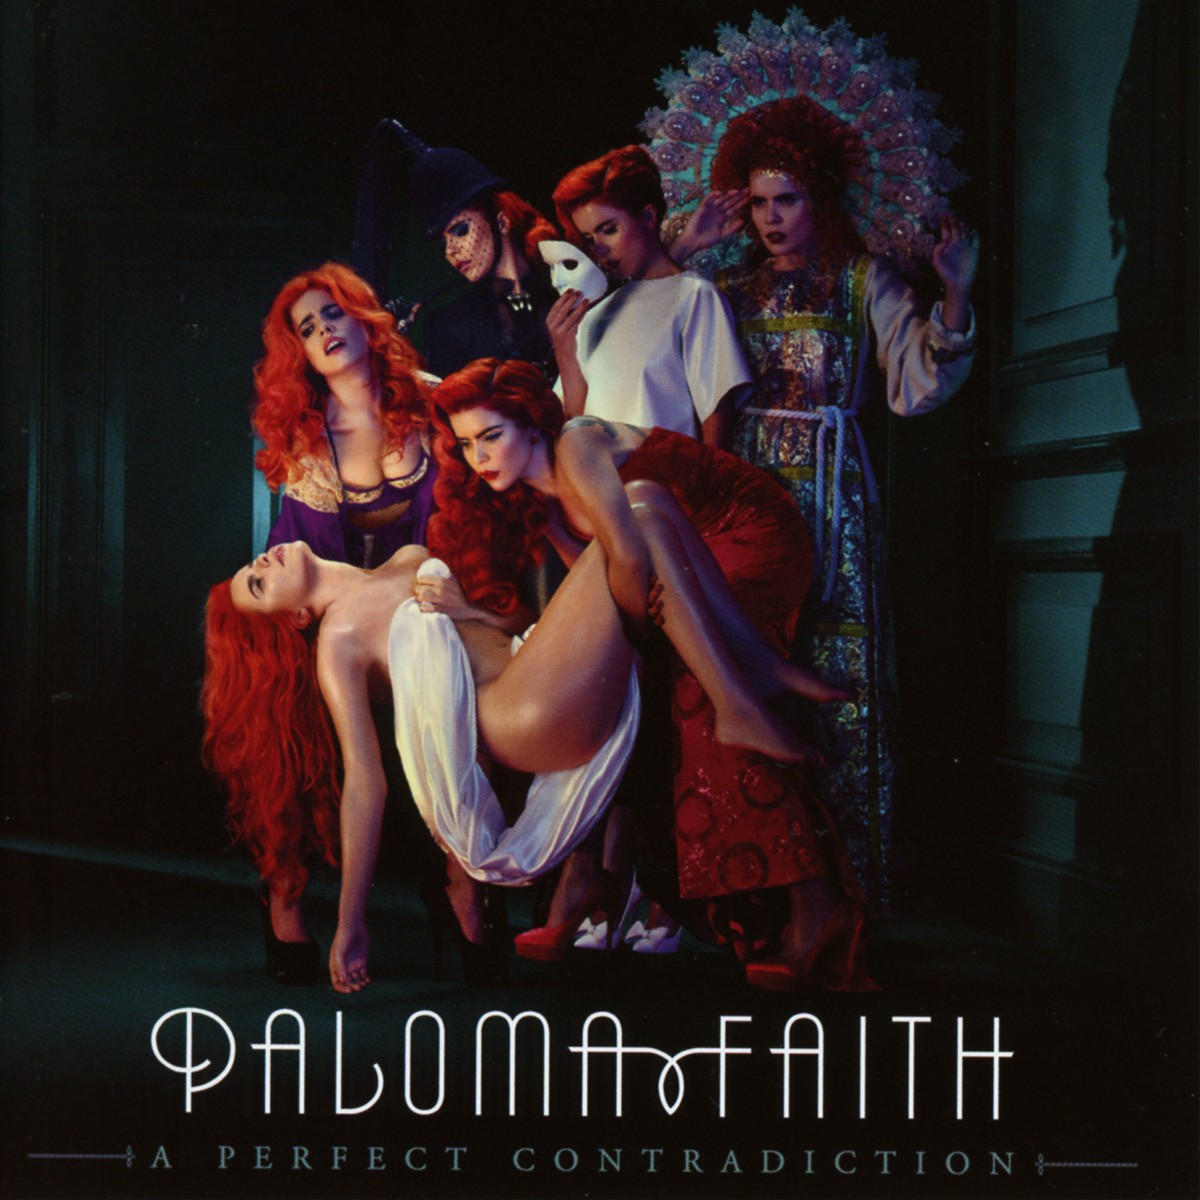 Paloma Faith - A (Deluxe) - Perfect Contradiction (CD)